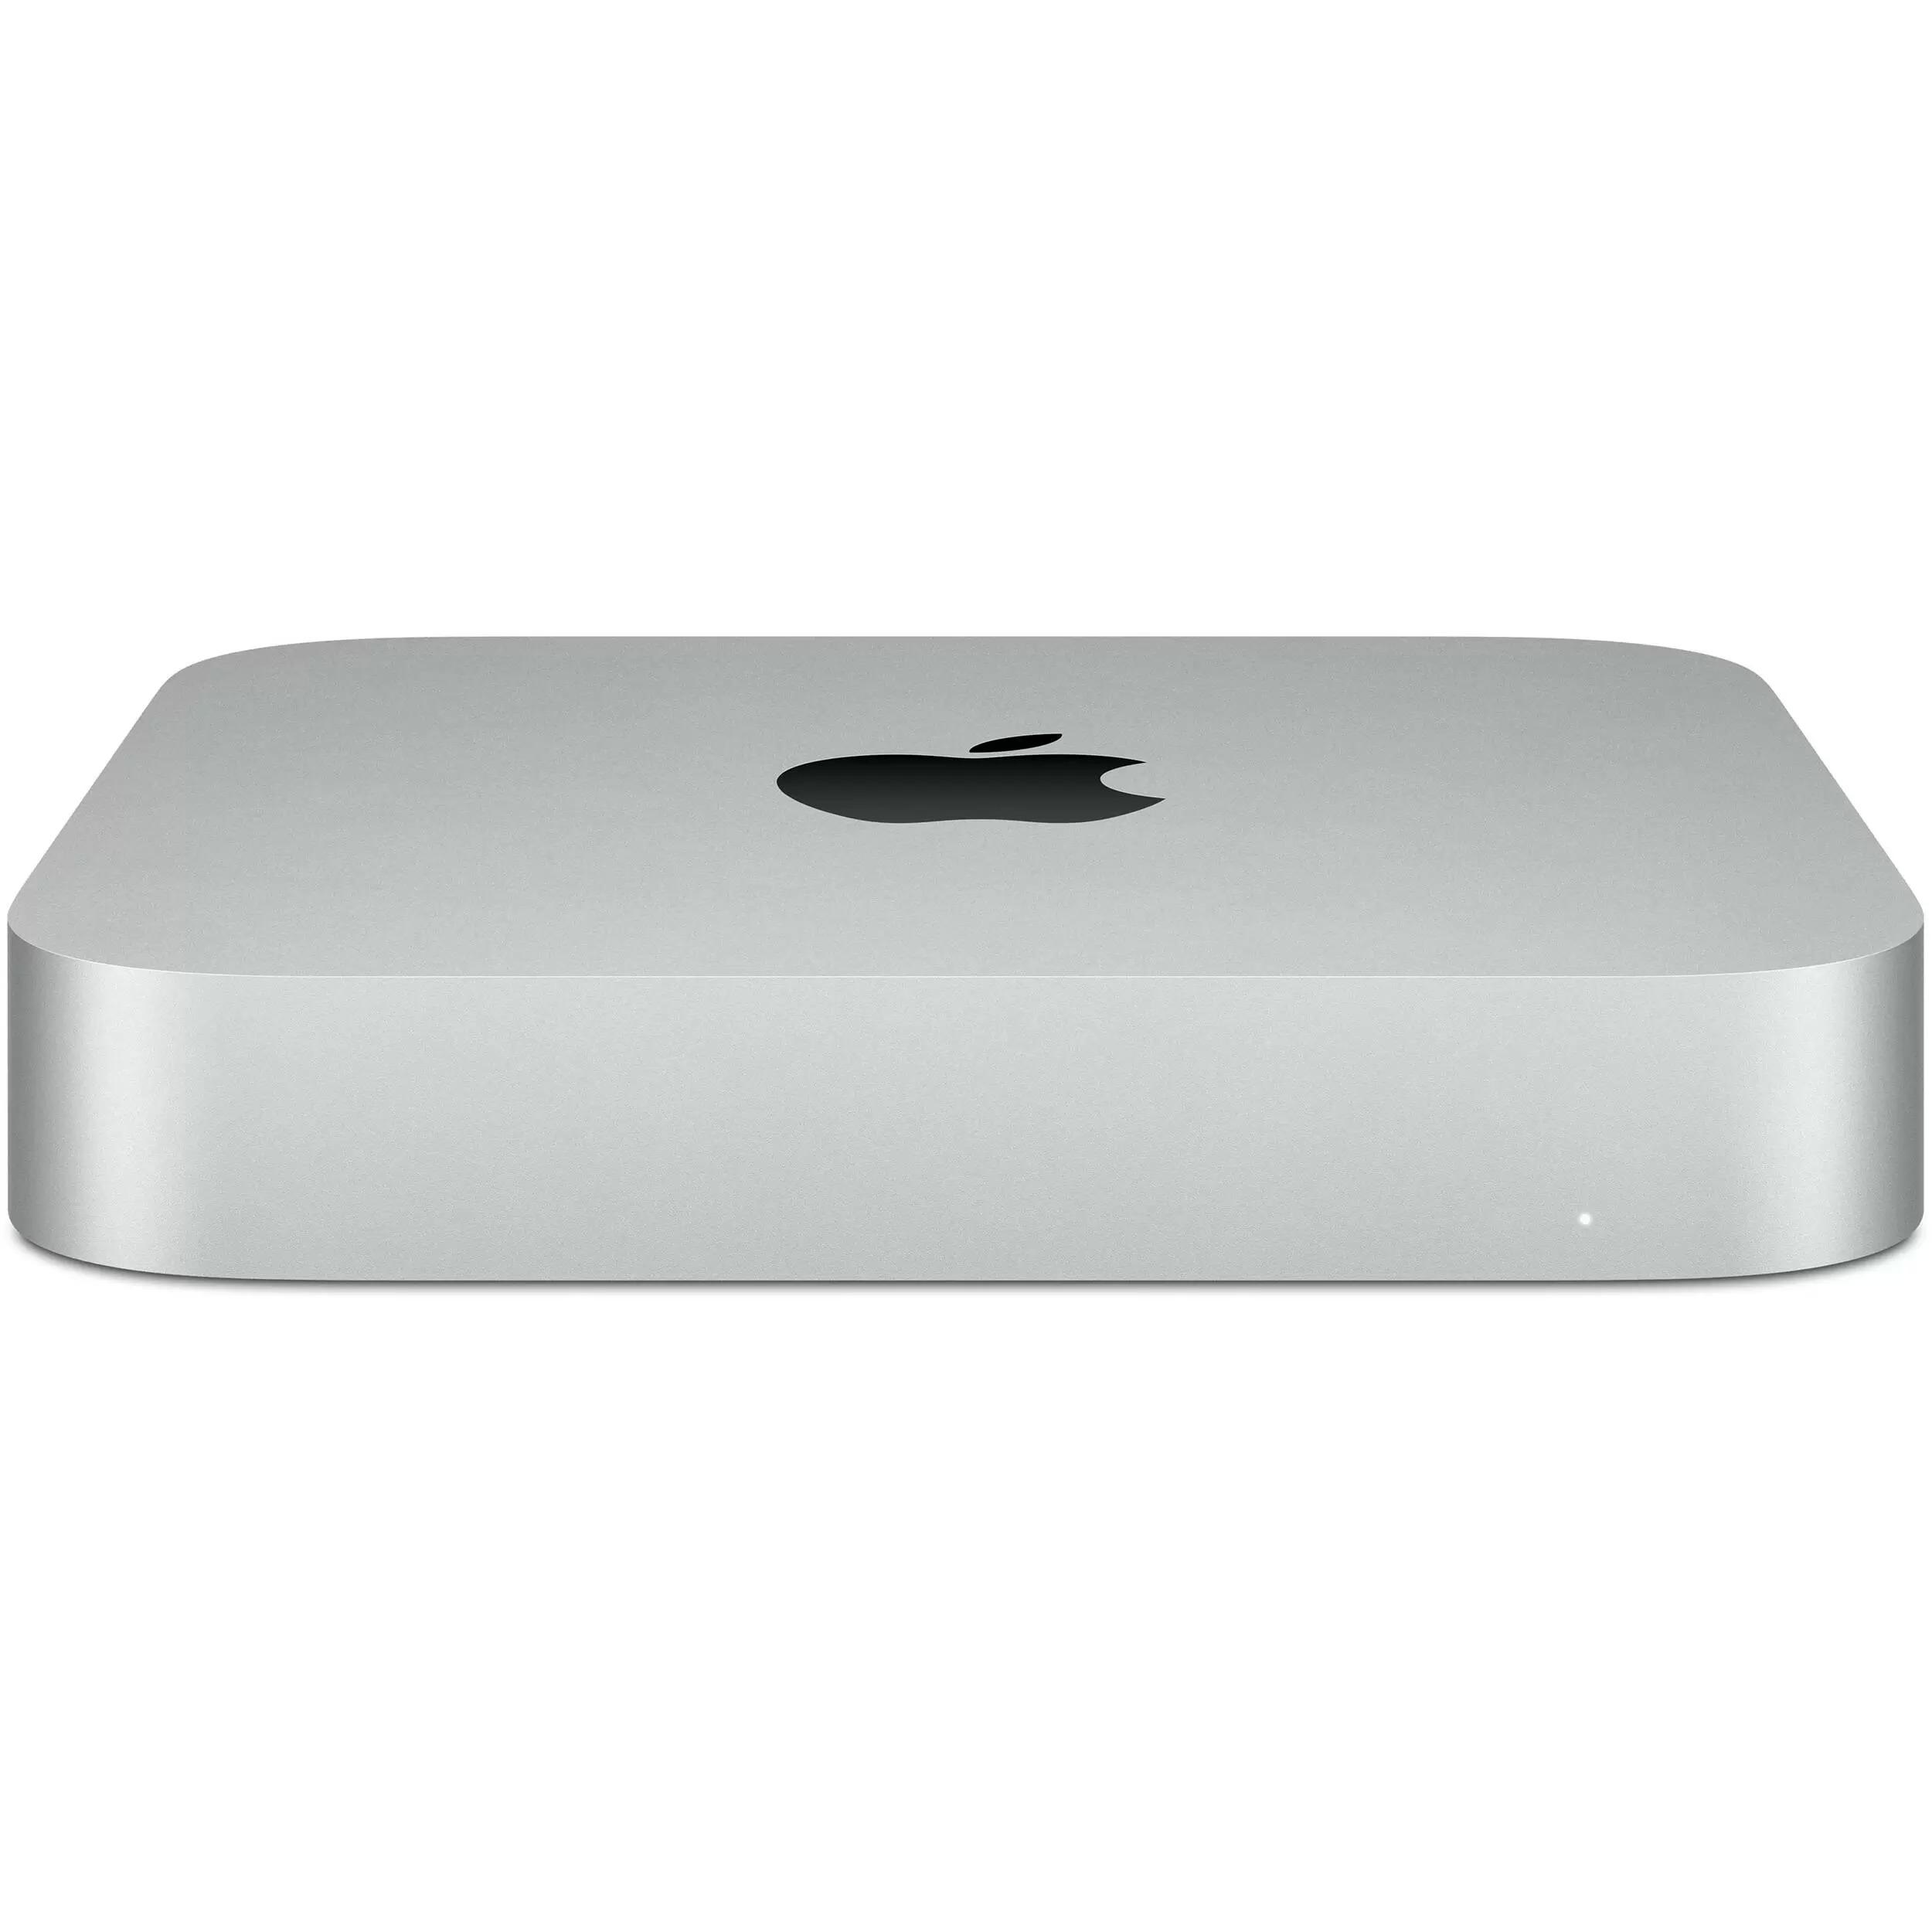 256GB Apple Mac Mini M1 2020 Model for $569.99 Shipped